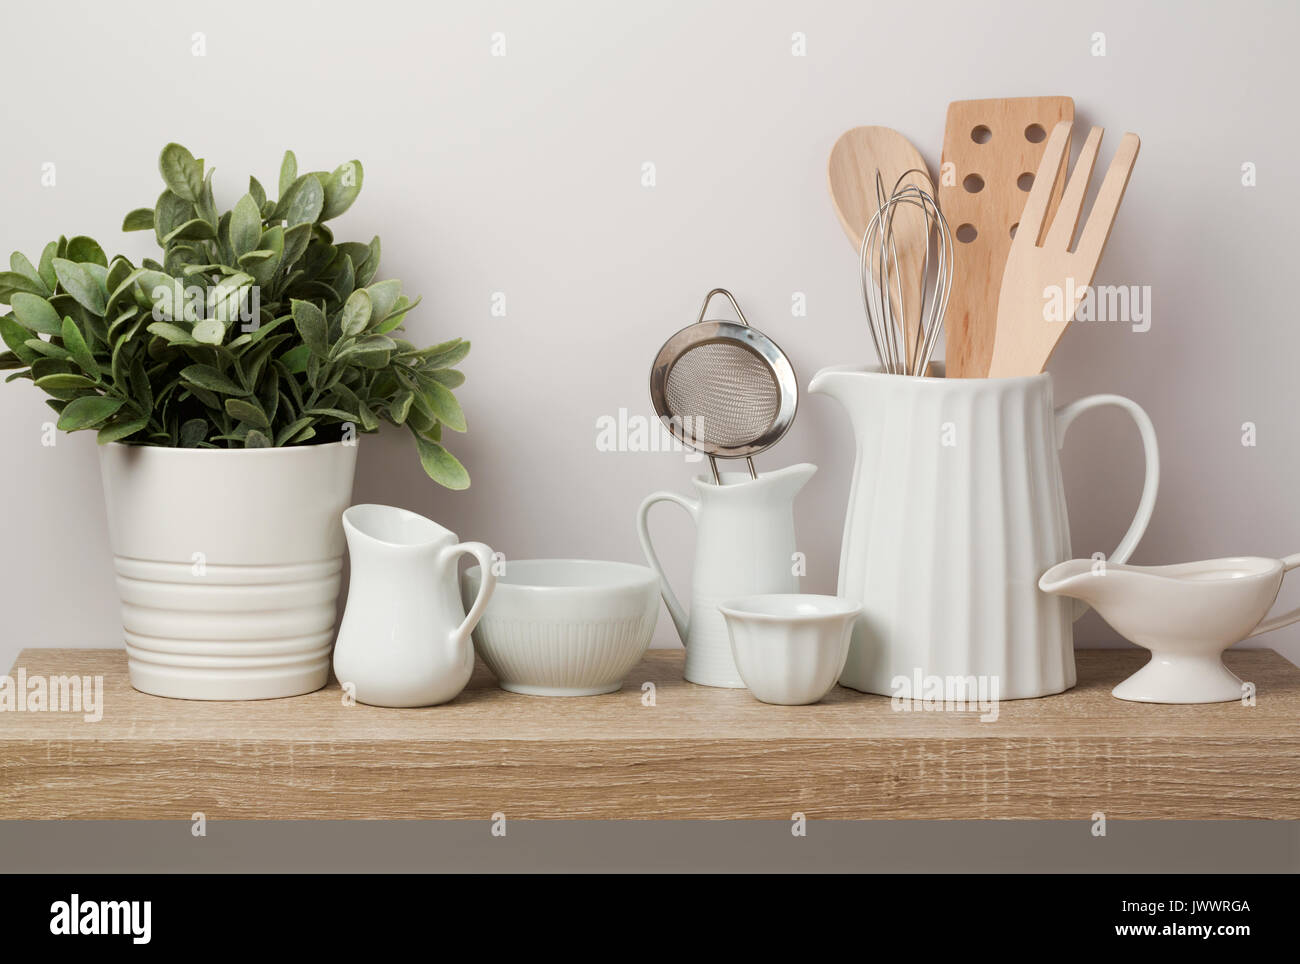 https://c8.alamy.com/comp/JWWRGA/kitchen-utensils-and-dishware-on-wooden-shelf-kitchen-interior-background-JWWRGA.jpg